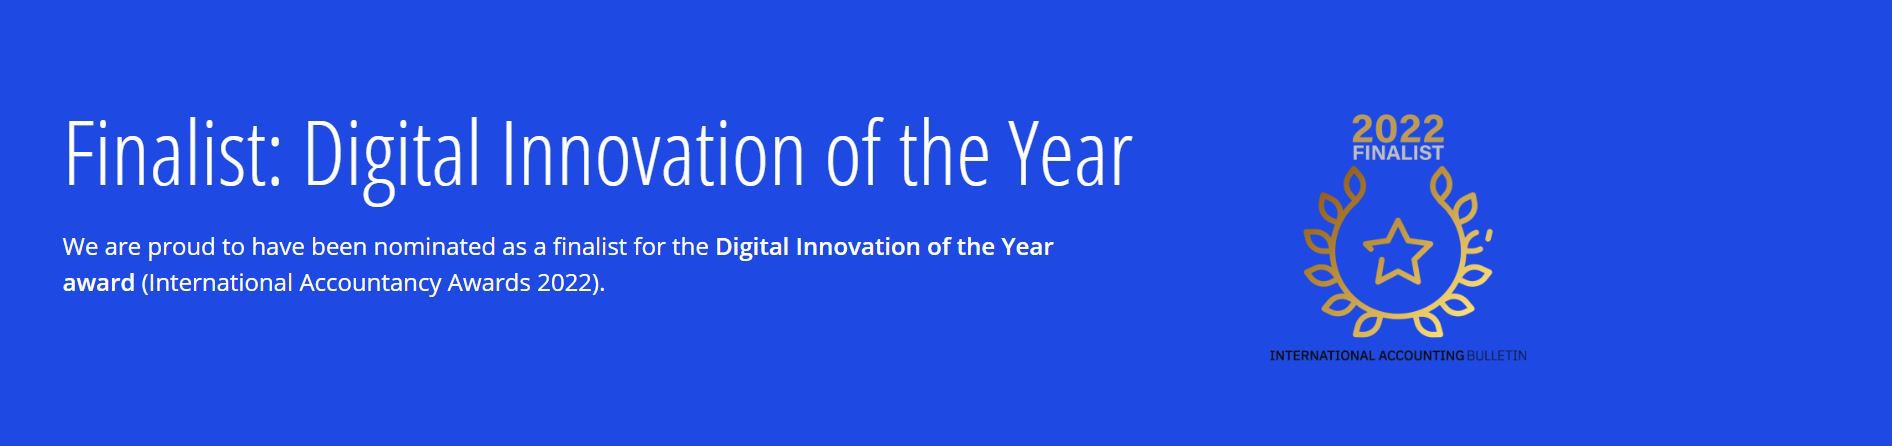 2022 digital innovation of the year finalist